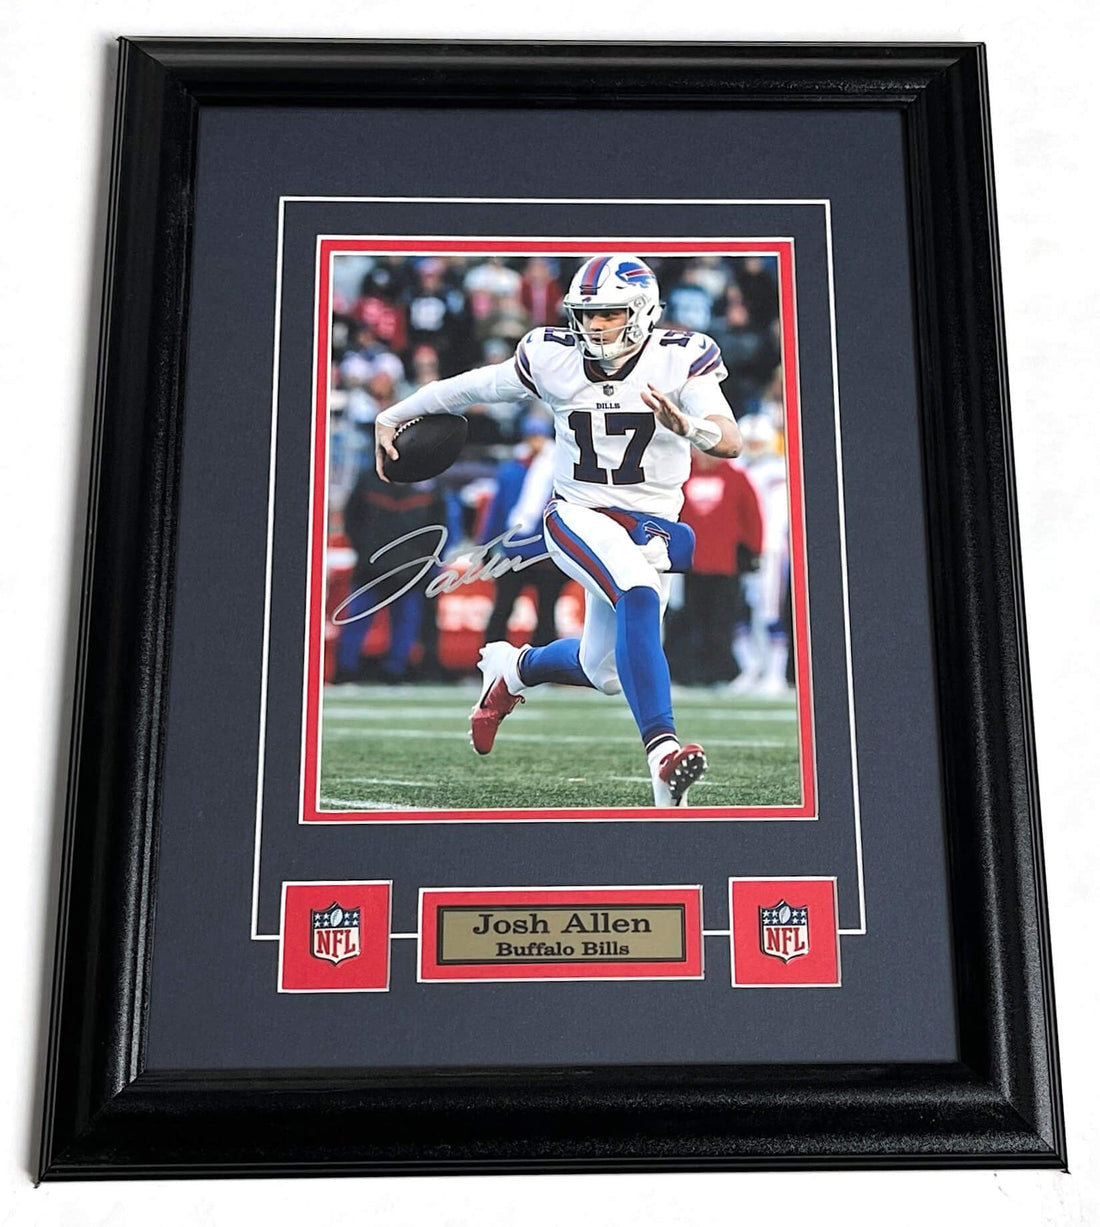 Josh Allen Autograph Buffalo Bills Framed NFL Memorabilia. Accompanied with a Certificate of Authentication.